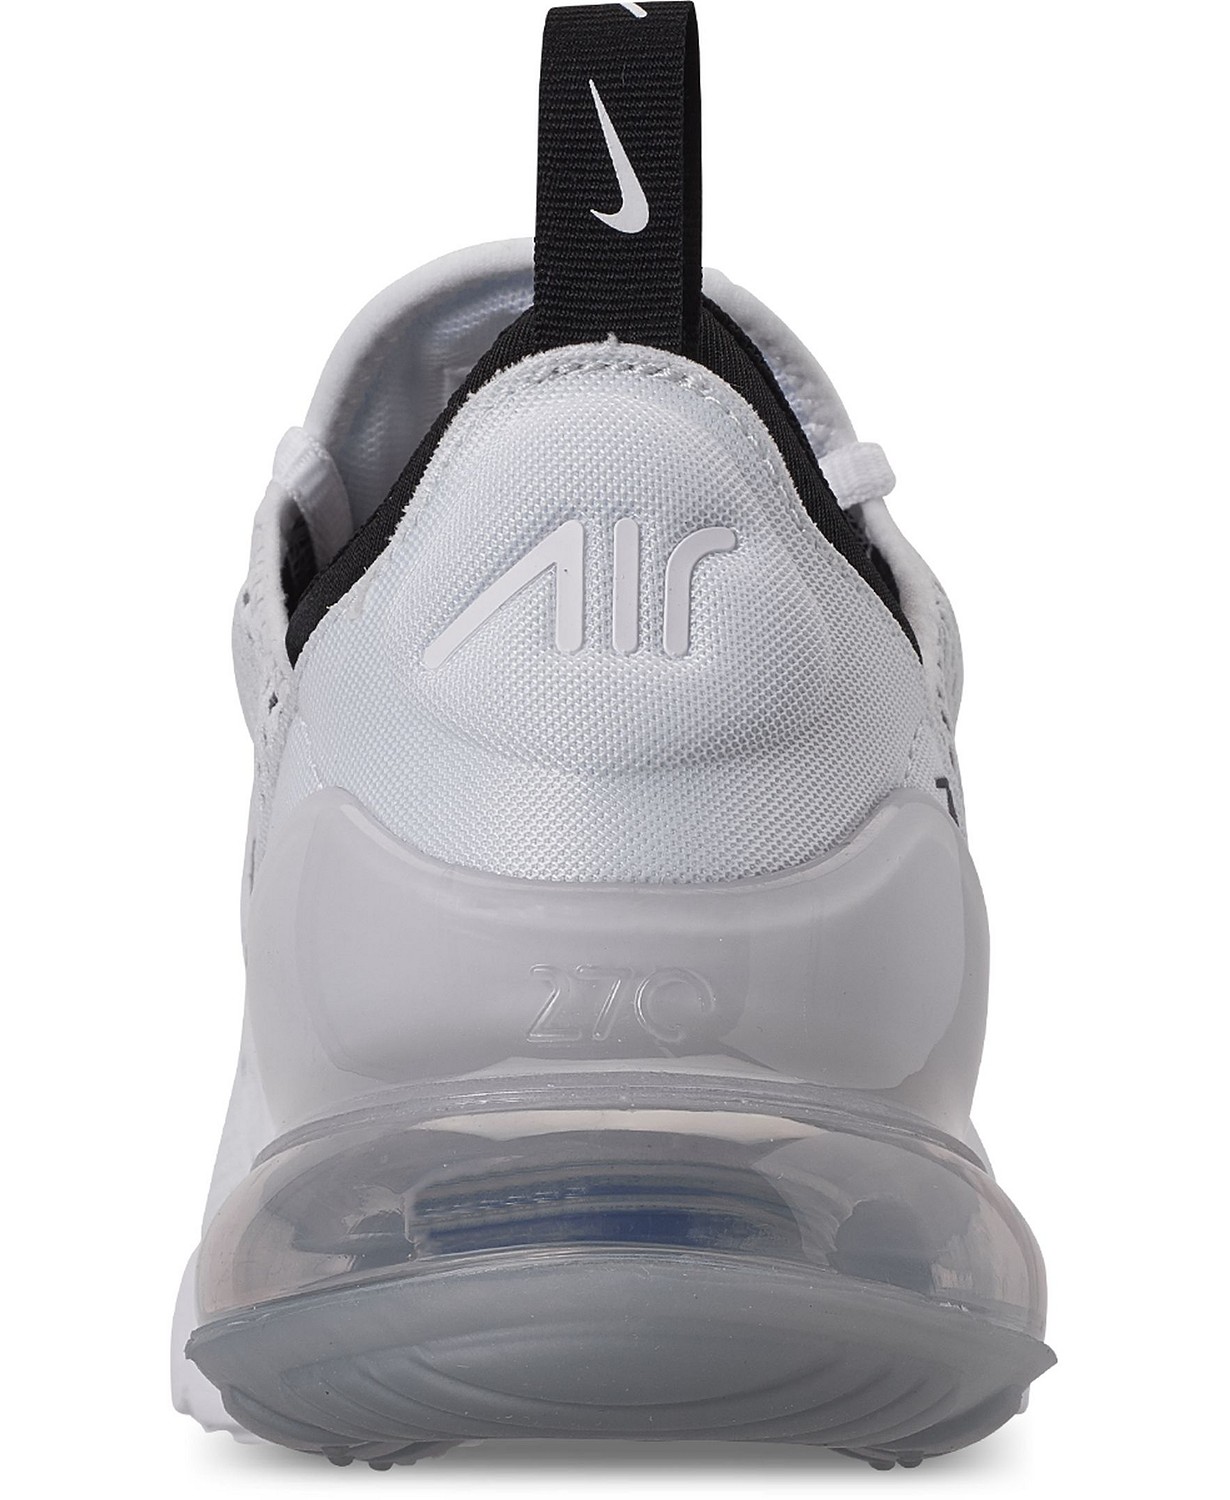 Nike Womens Air Max 270 Running Shoe (7) - image 5 of 5